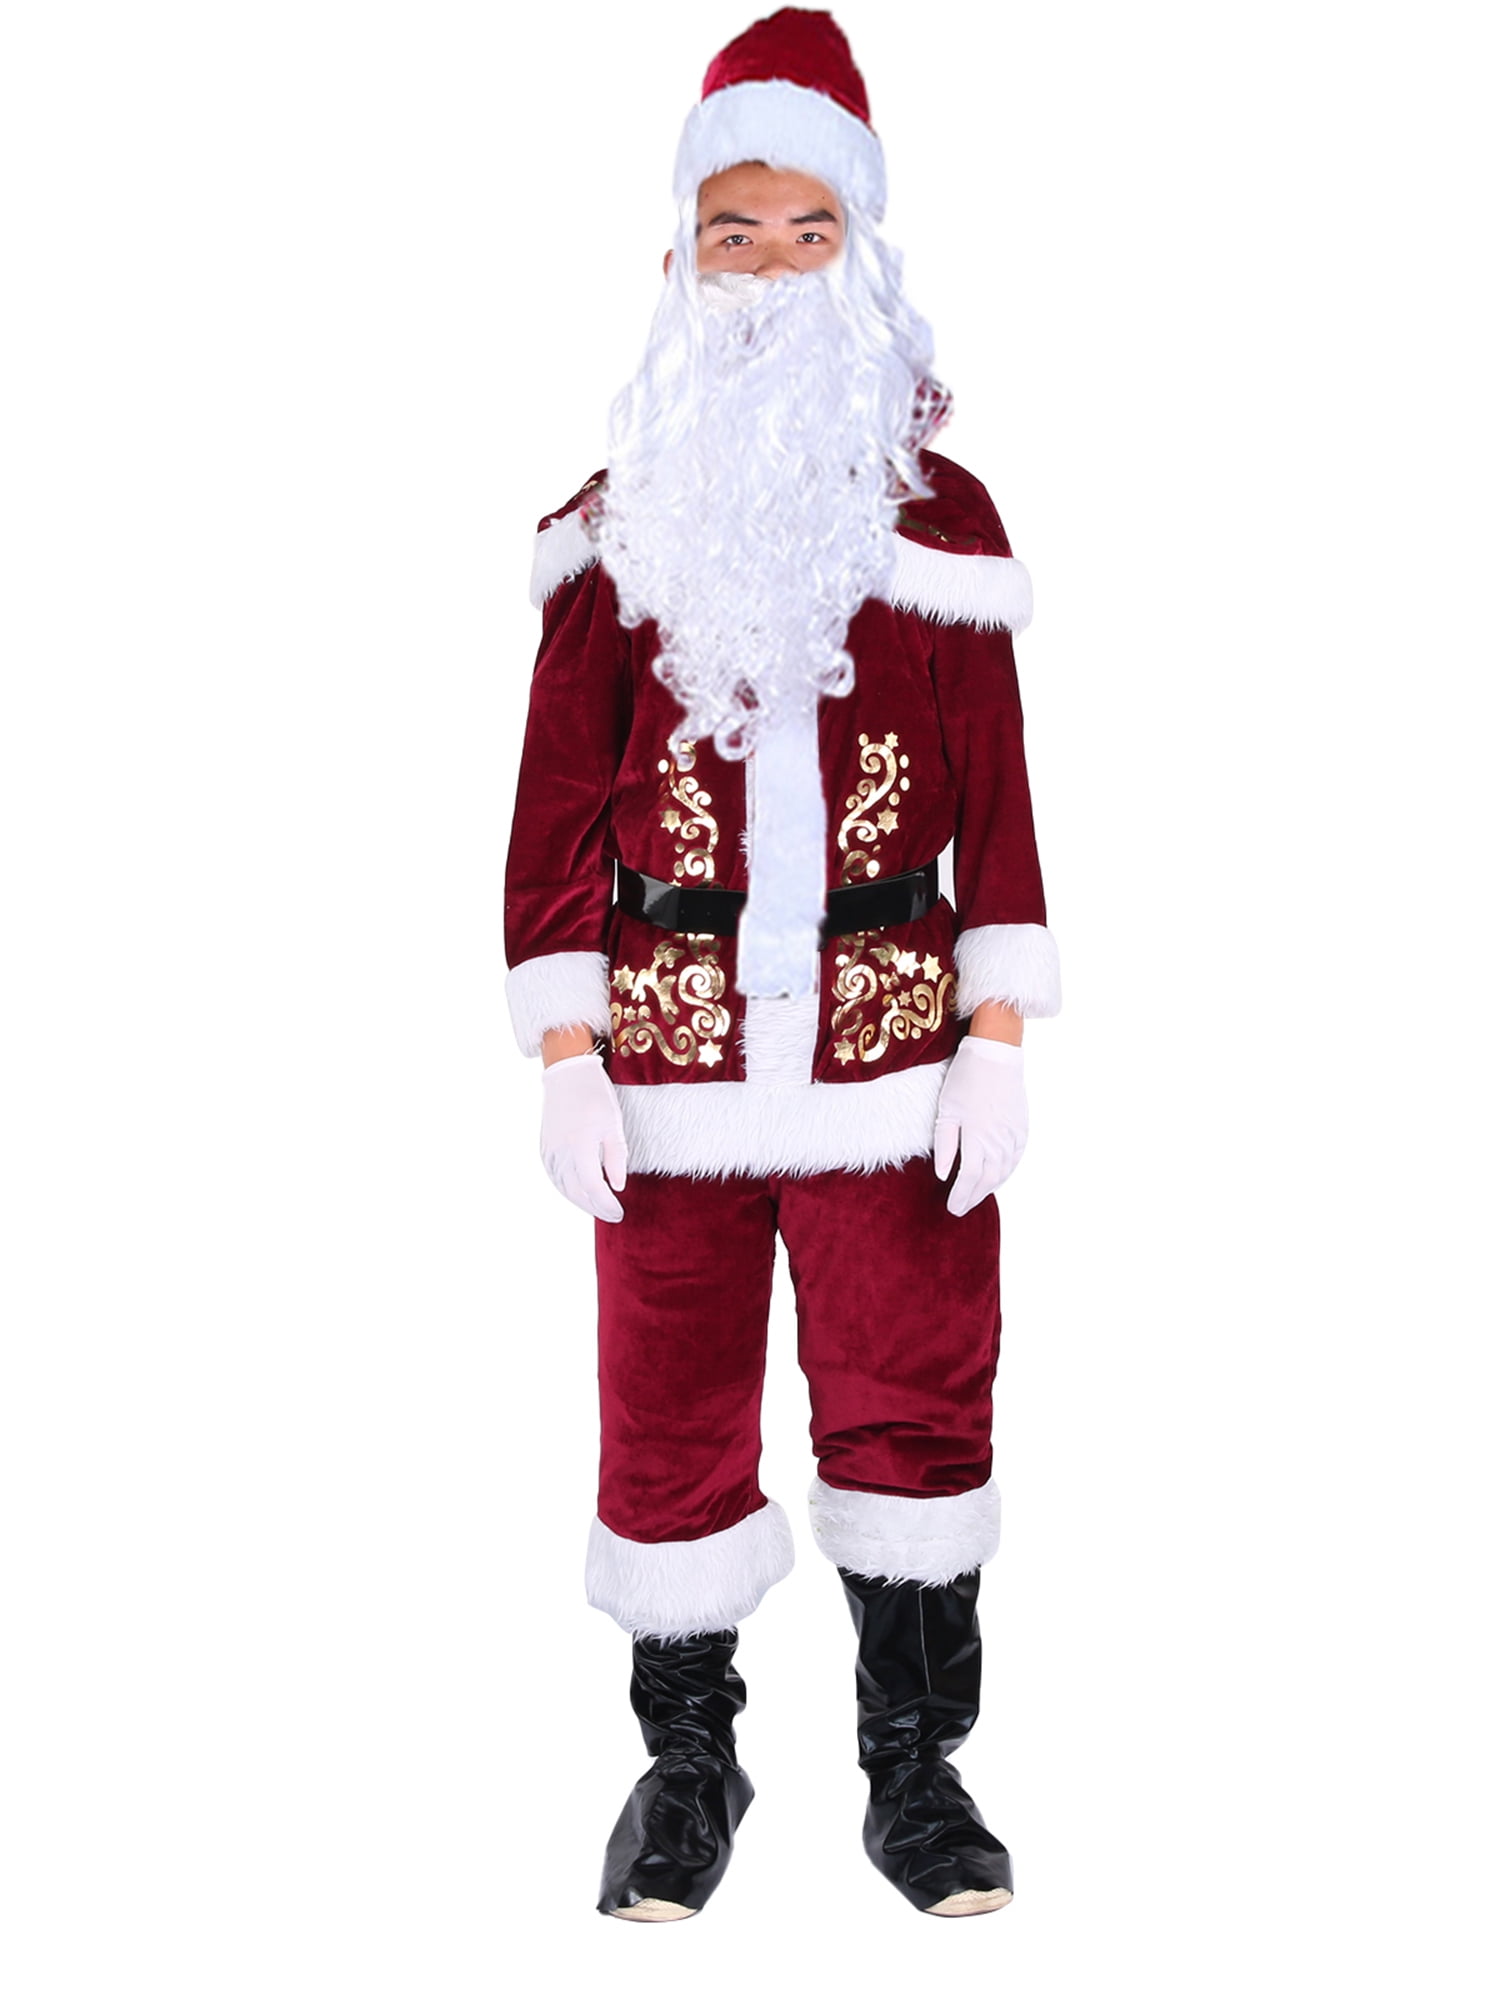 FOCUSNORM Adults Christmas Suit Set Red Santa Claus Father Xmas